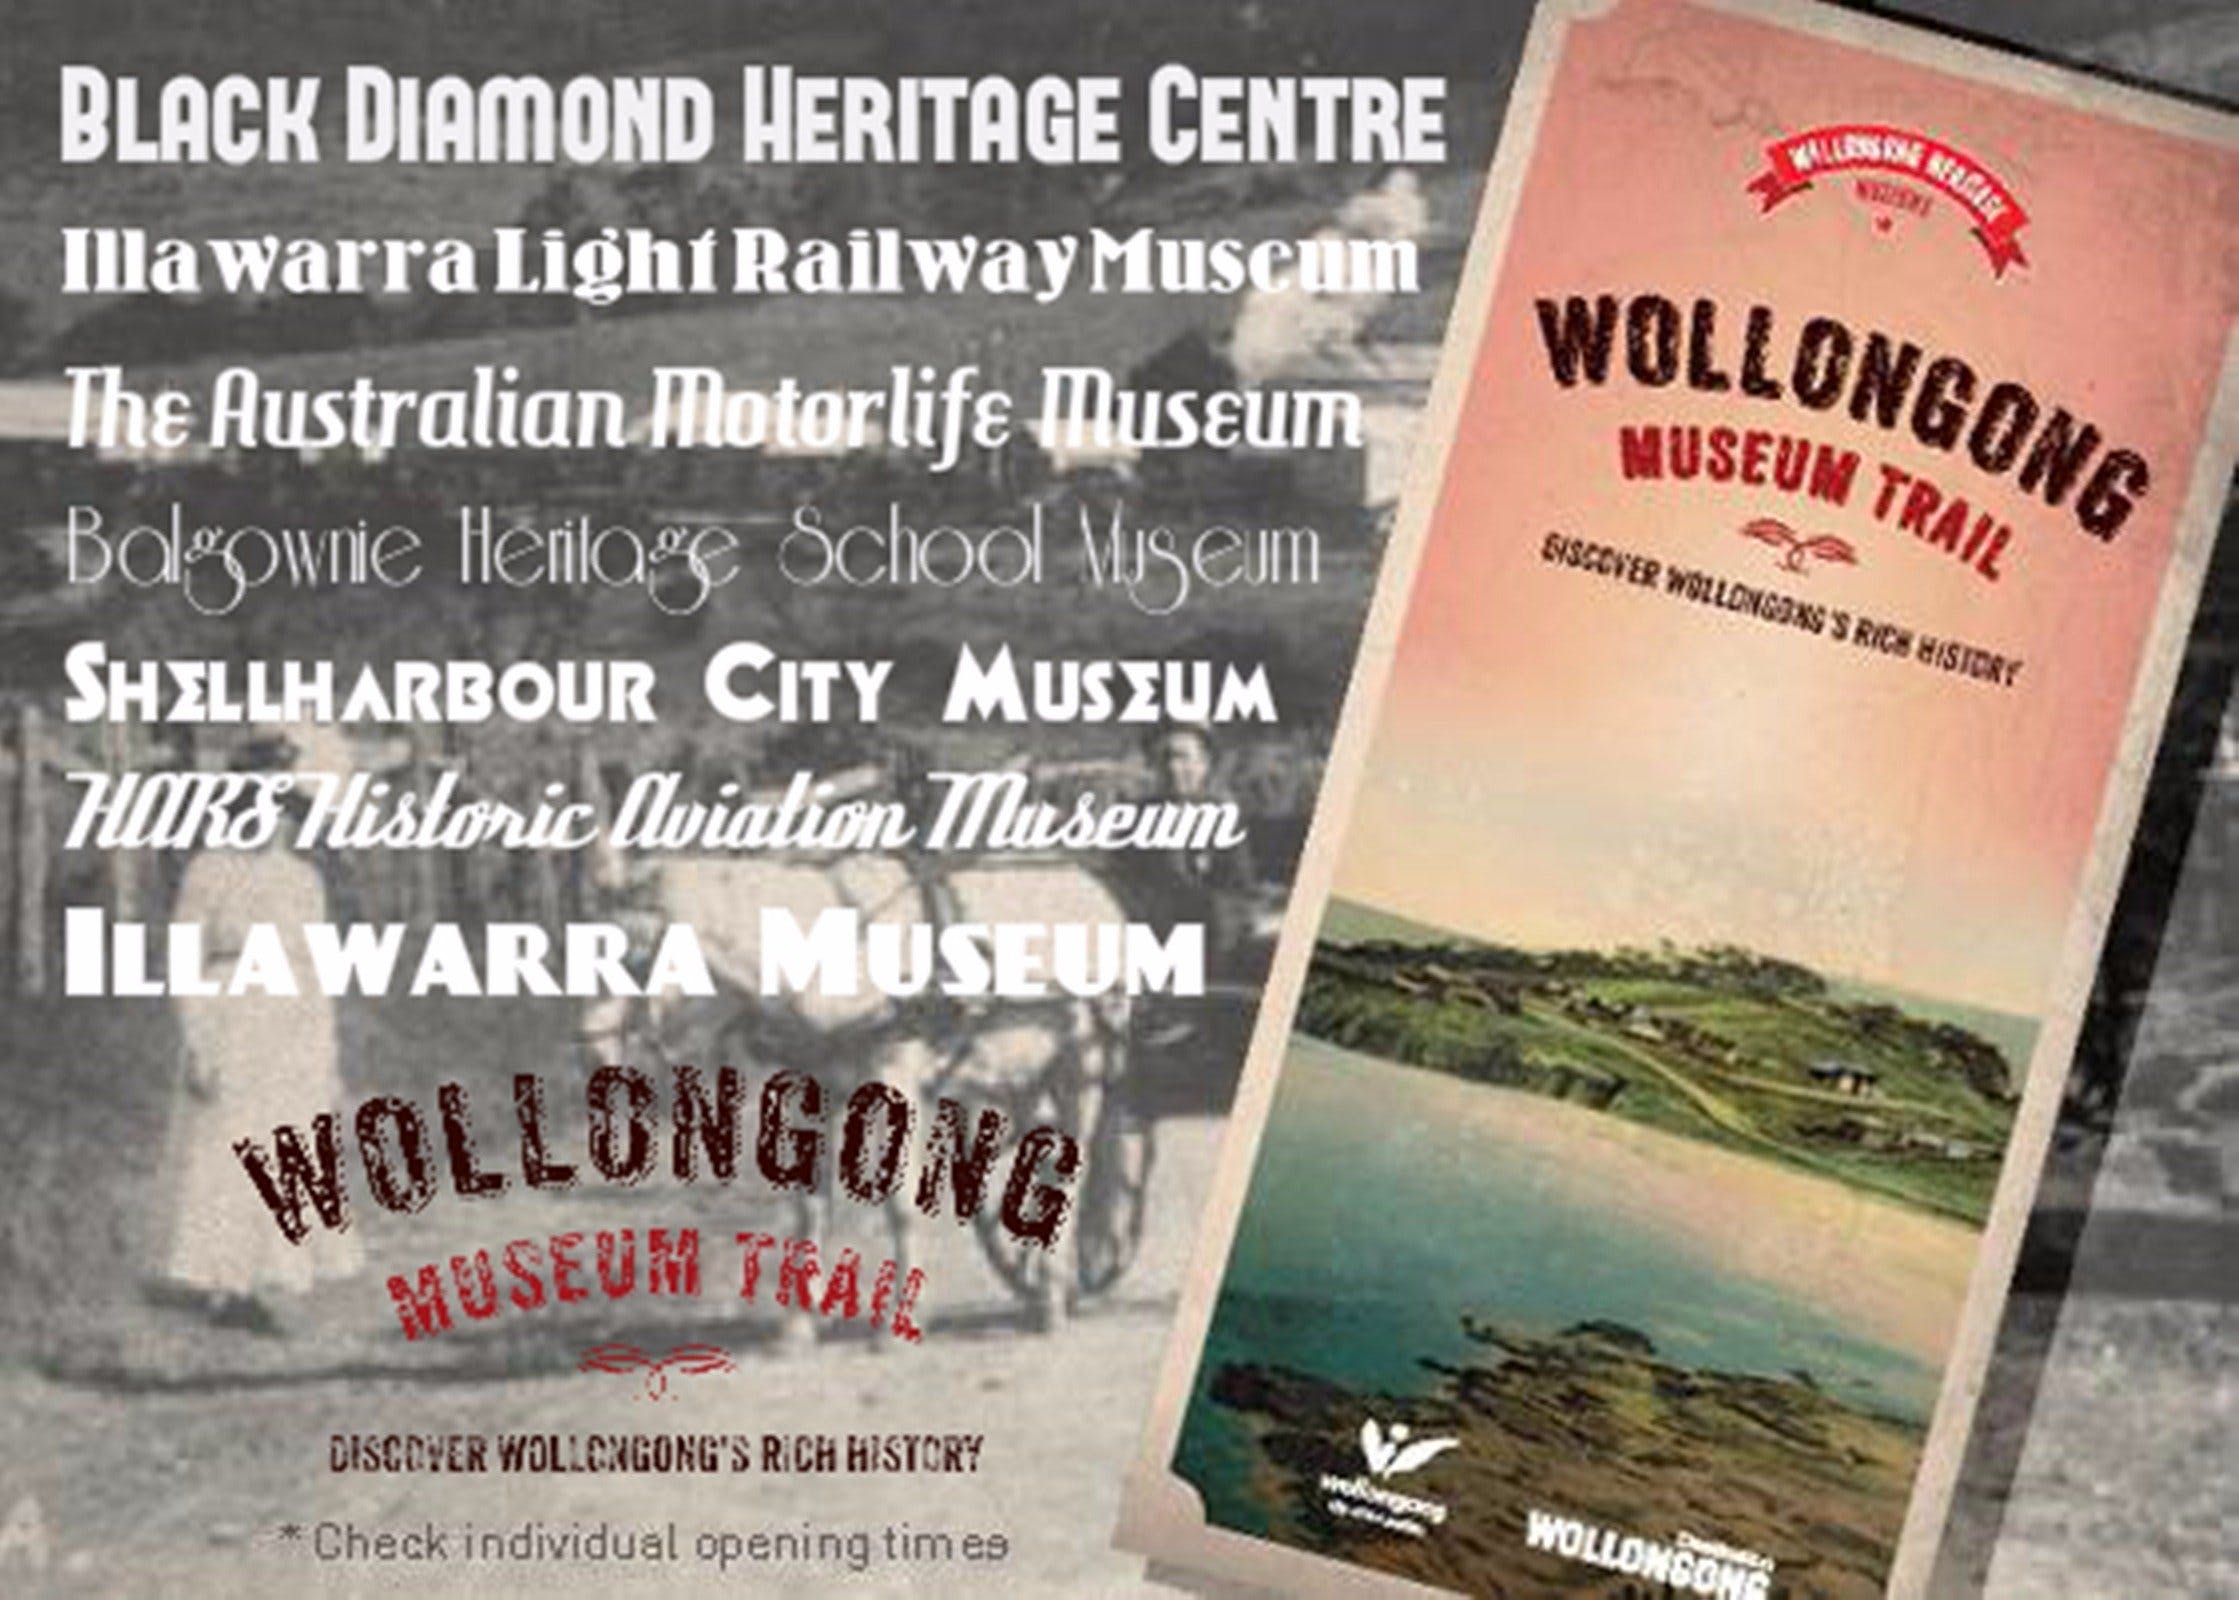 Wollongong Museum Trail